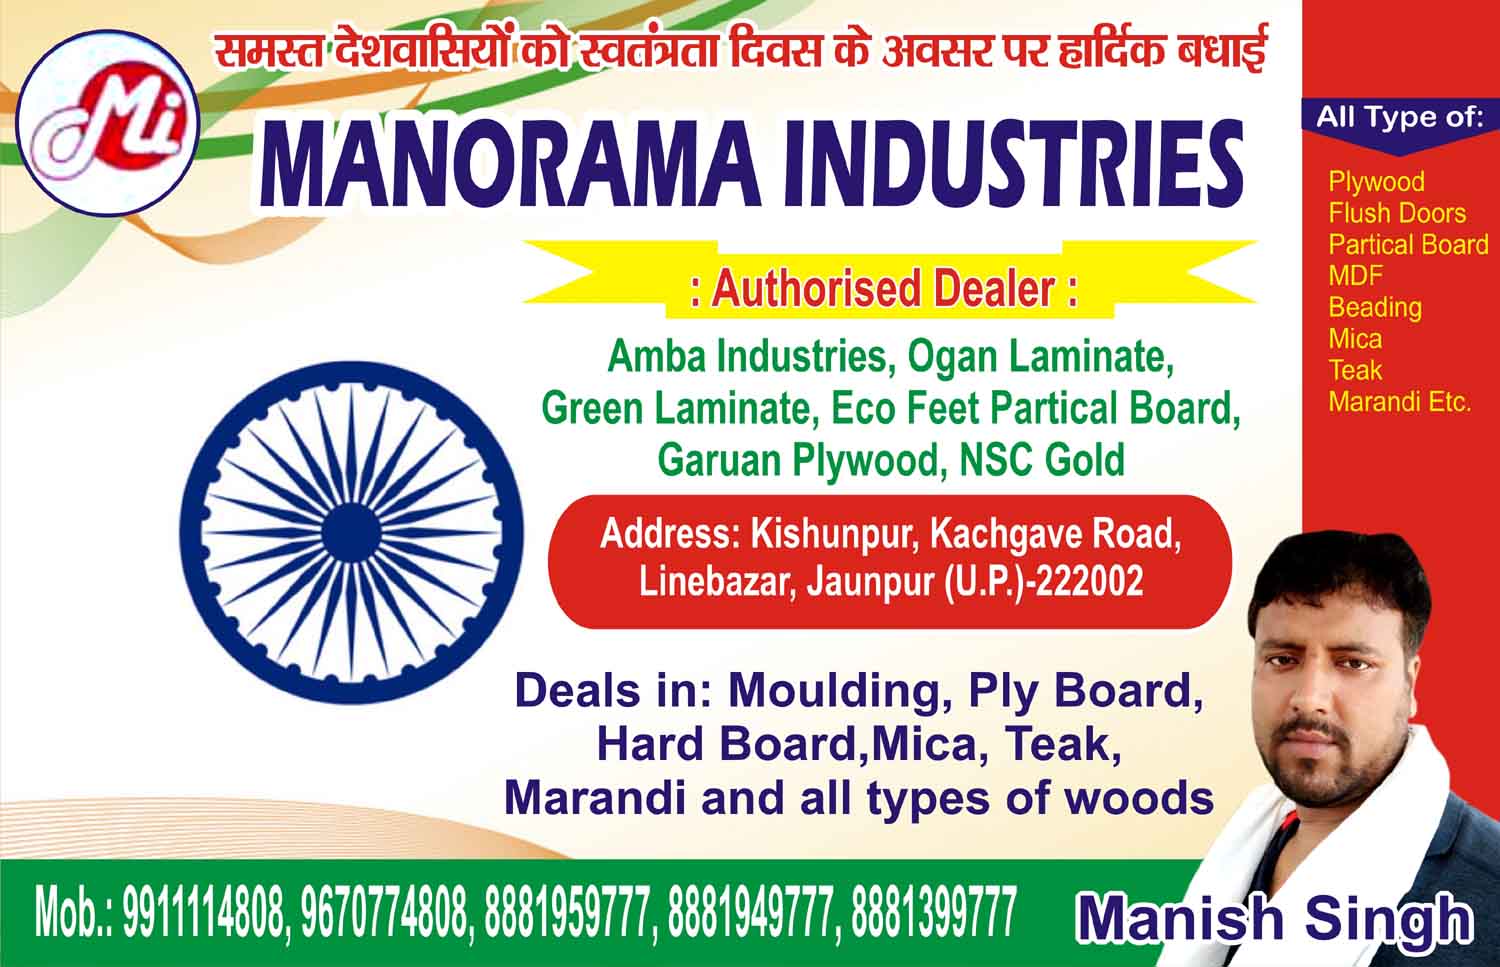 Happy Independence Day : Manorama Industries | Address: Kishunpur. Kachgave Road, Linebazar, Jaunpur (U.P.) | Mob.: 9911114808, 9670774808, 8881959777, 8881949777, 8881399777